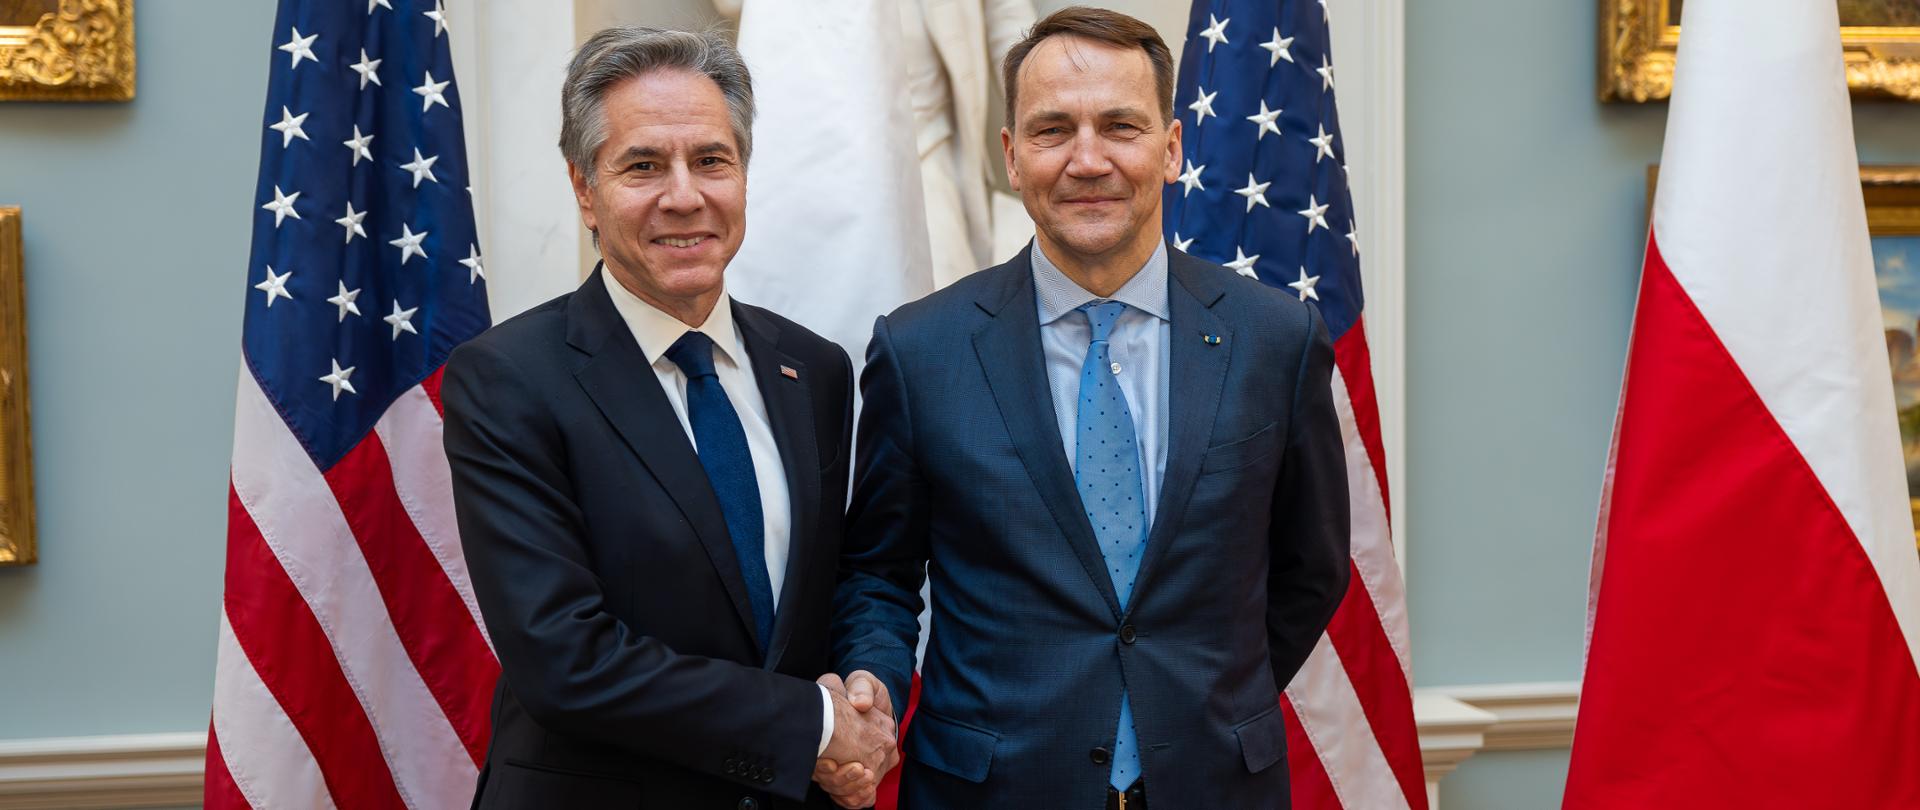 Foreign Minister Radosław Sikorski met with U.S. Secretary of State Antony Blinken in Washington, D.C. 